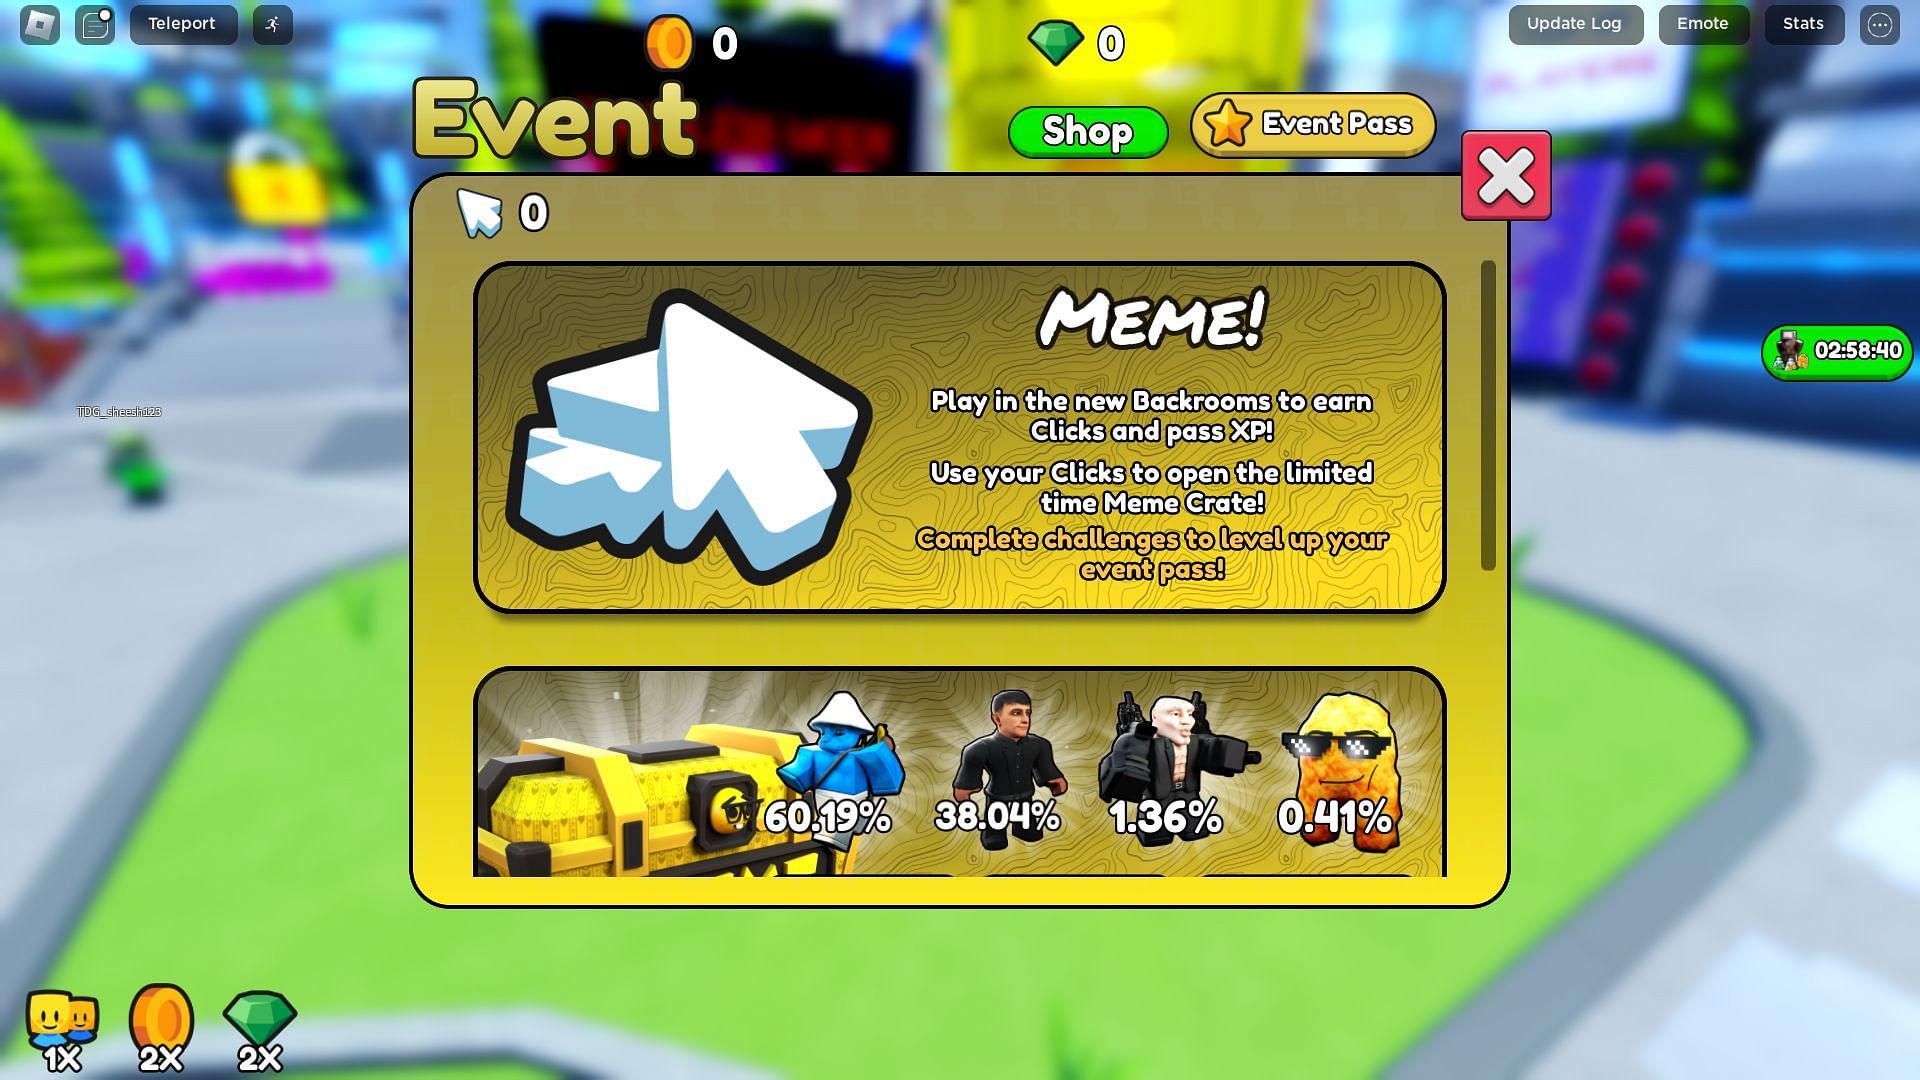 In-game Meme Event description (Image via Roblox)